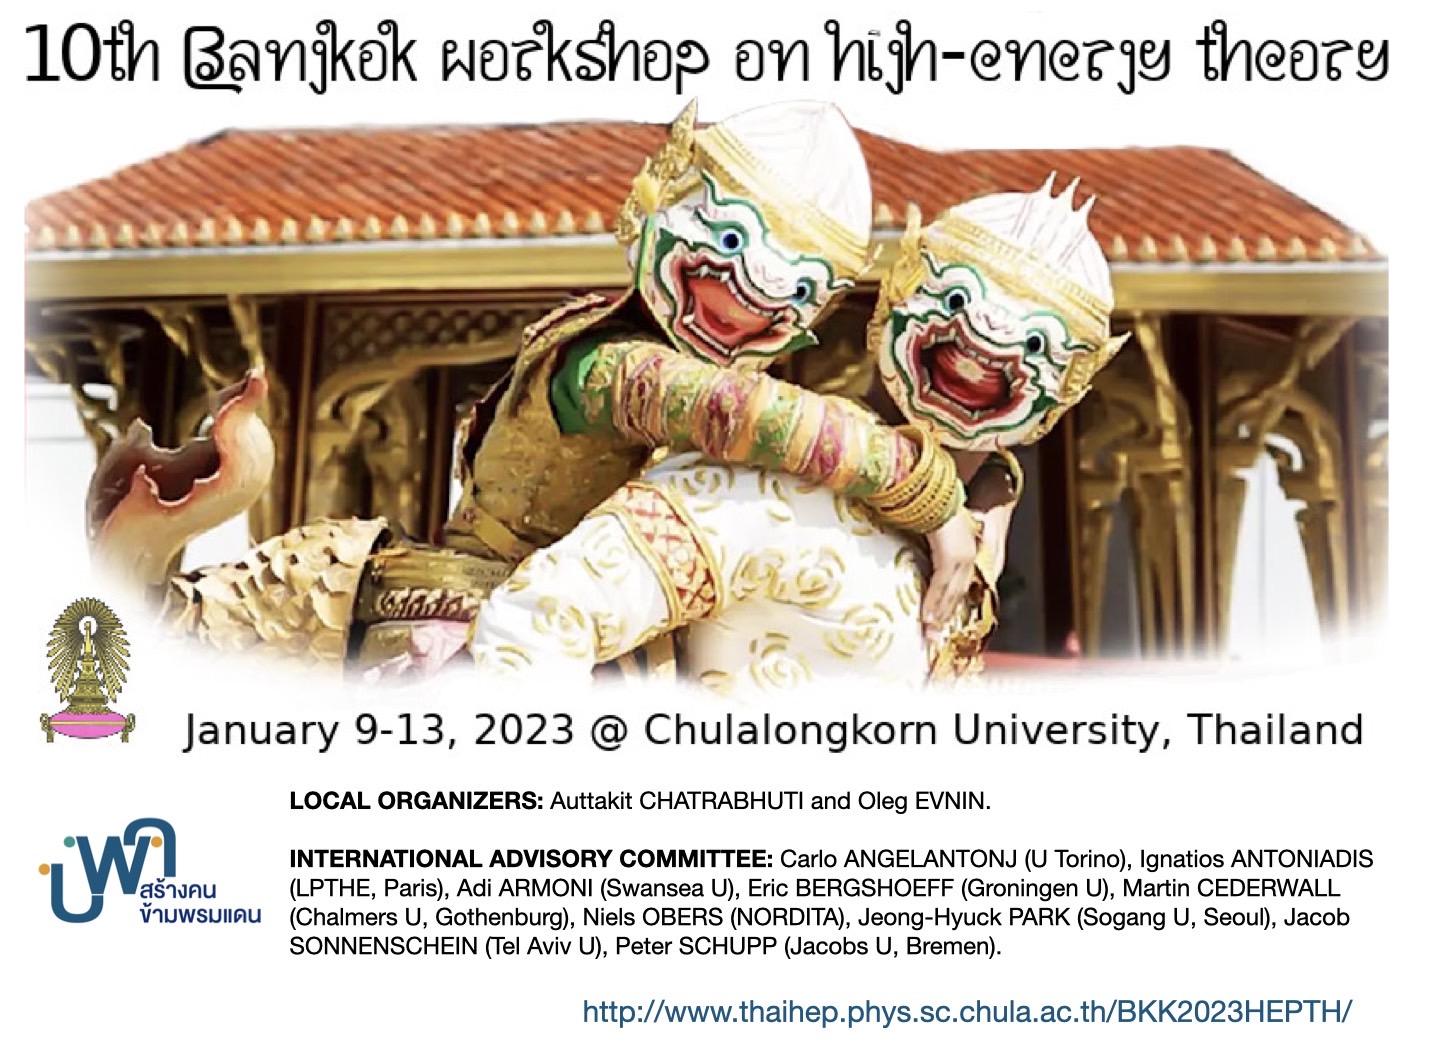 10 th Bangkok workshop on High-Energy Theory